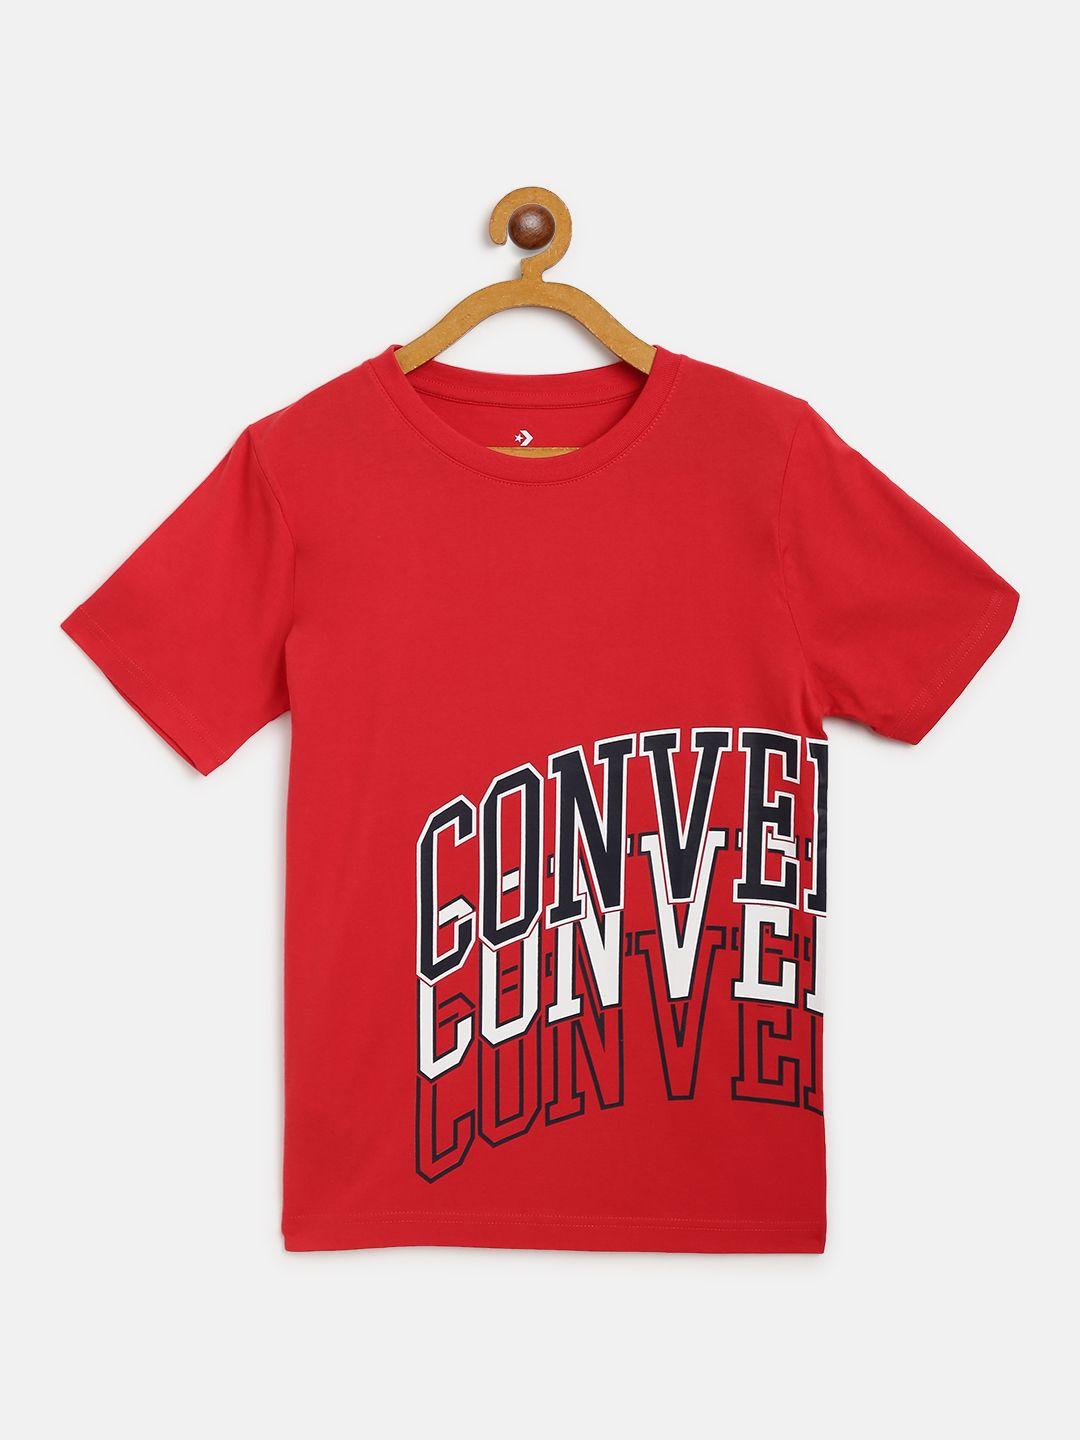 converse-boys-red-&-navy-brand-logo-print-round-neck-t-shirt